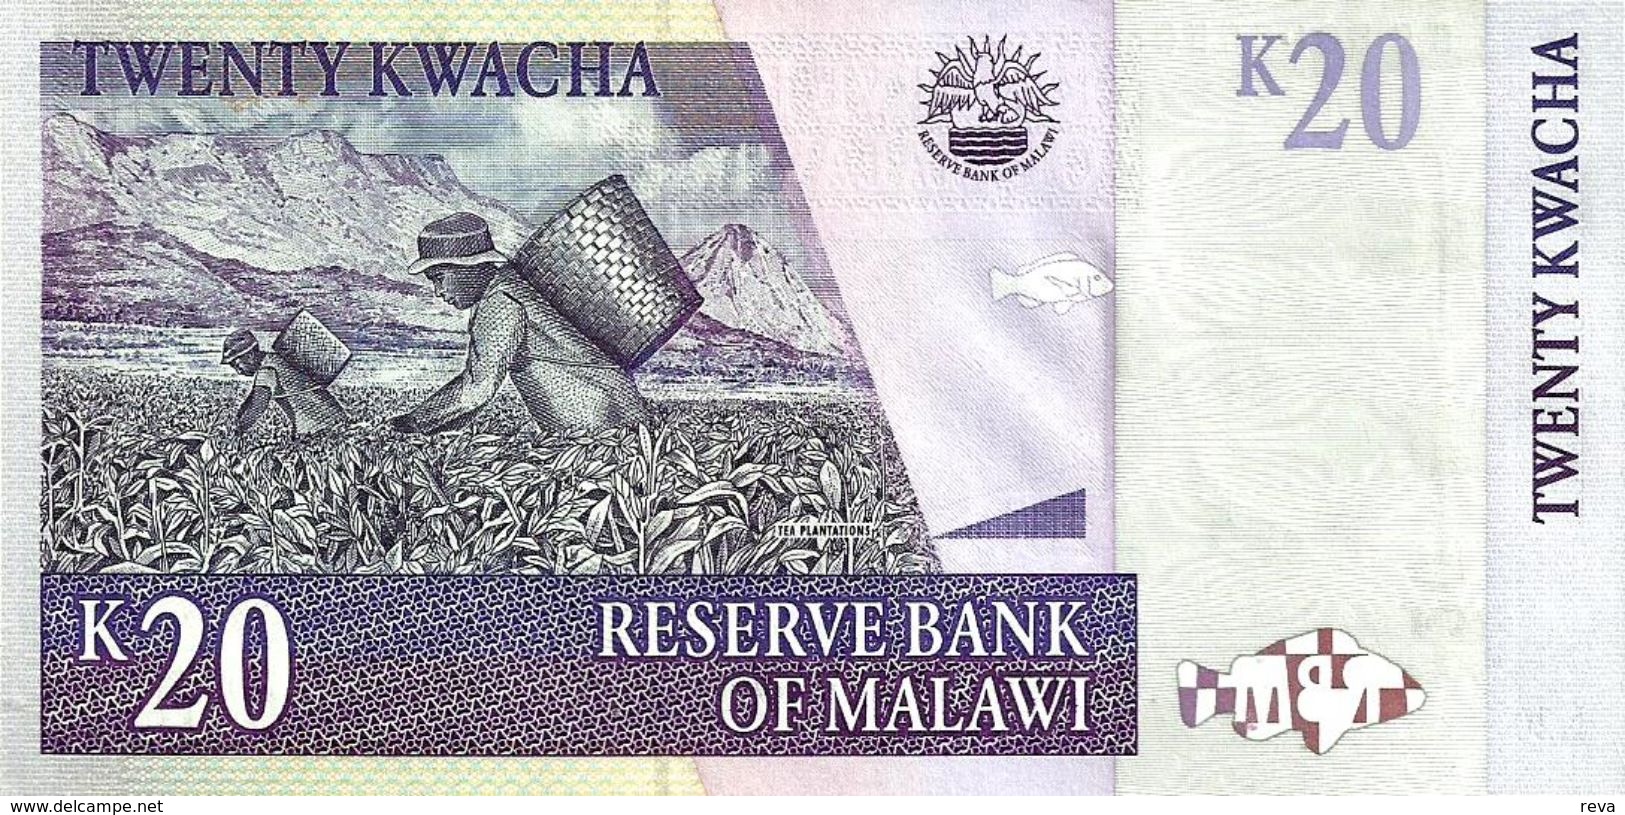 MALAWI 20 KWACHA PURPLE MAN FRONT LANDSCAPE MAN BACK DATED 31-10-2007 P.50 UNC READ DESCRIPTION - Malawi